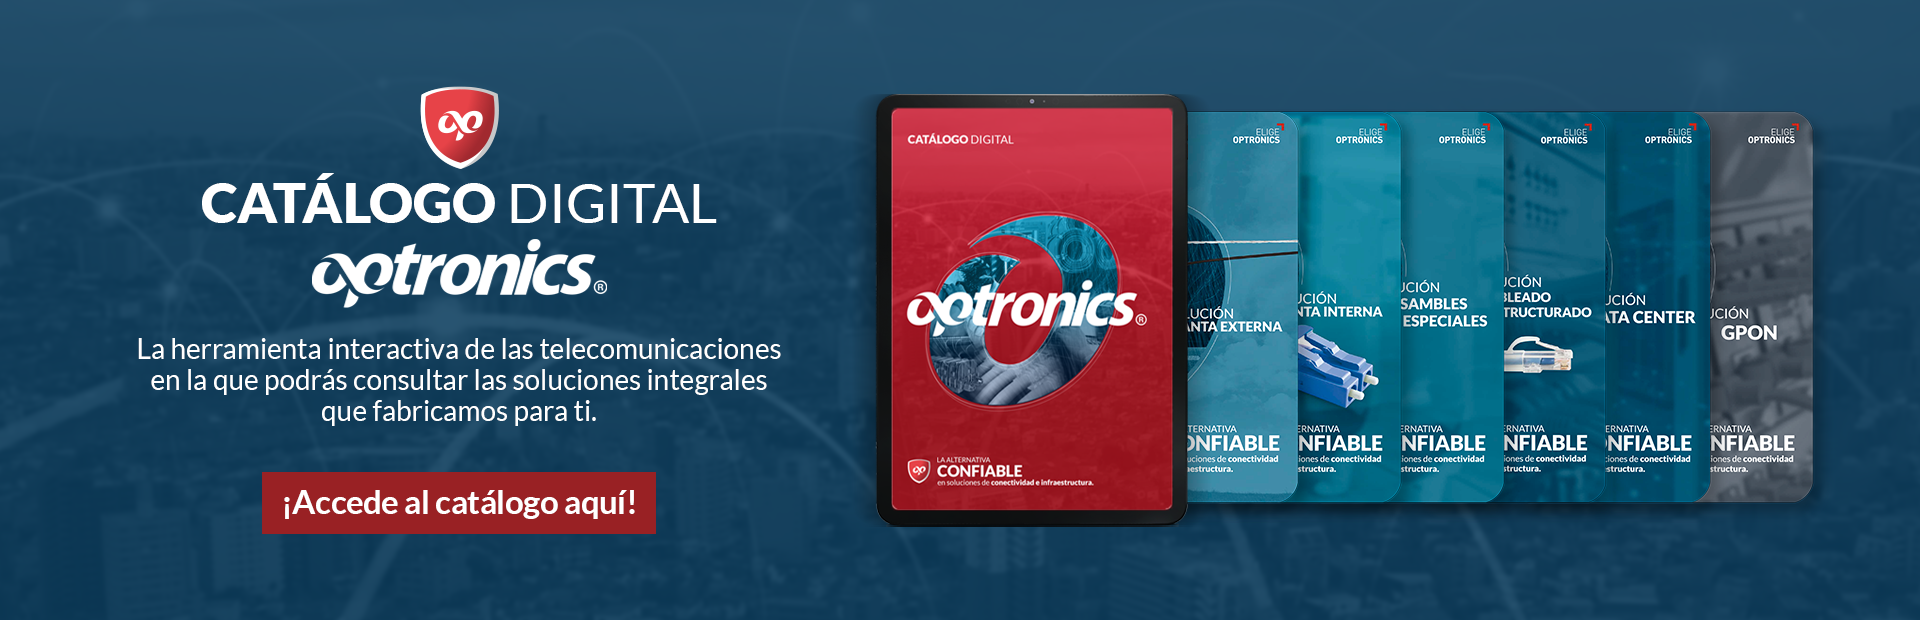 catalogo-optronics